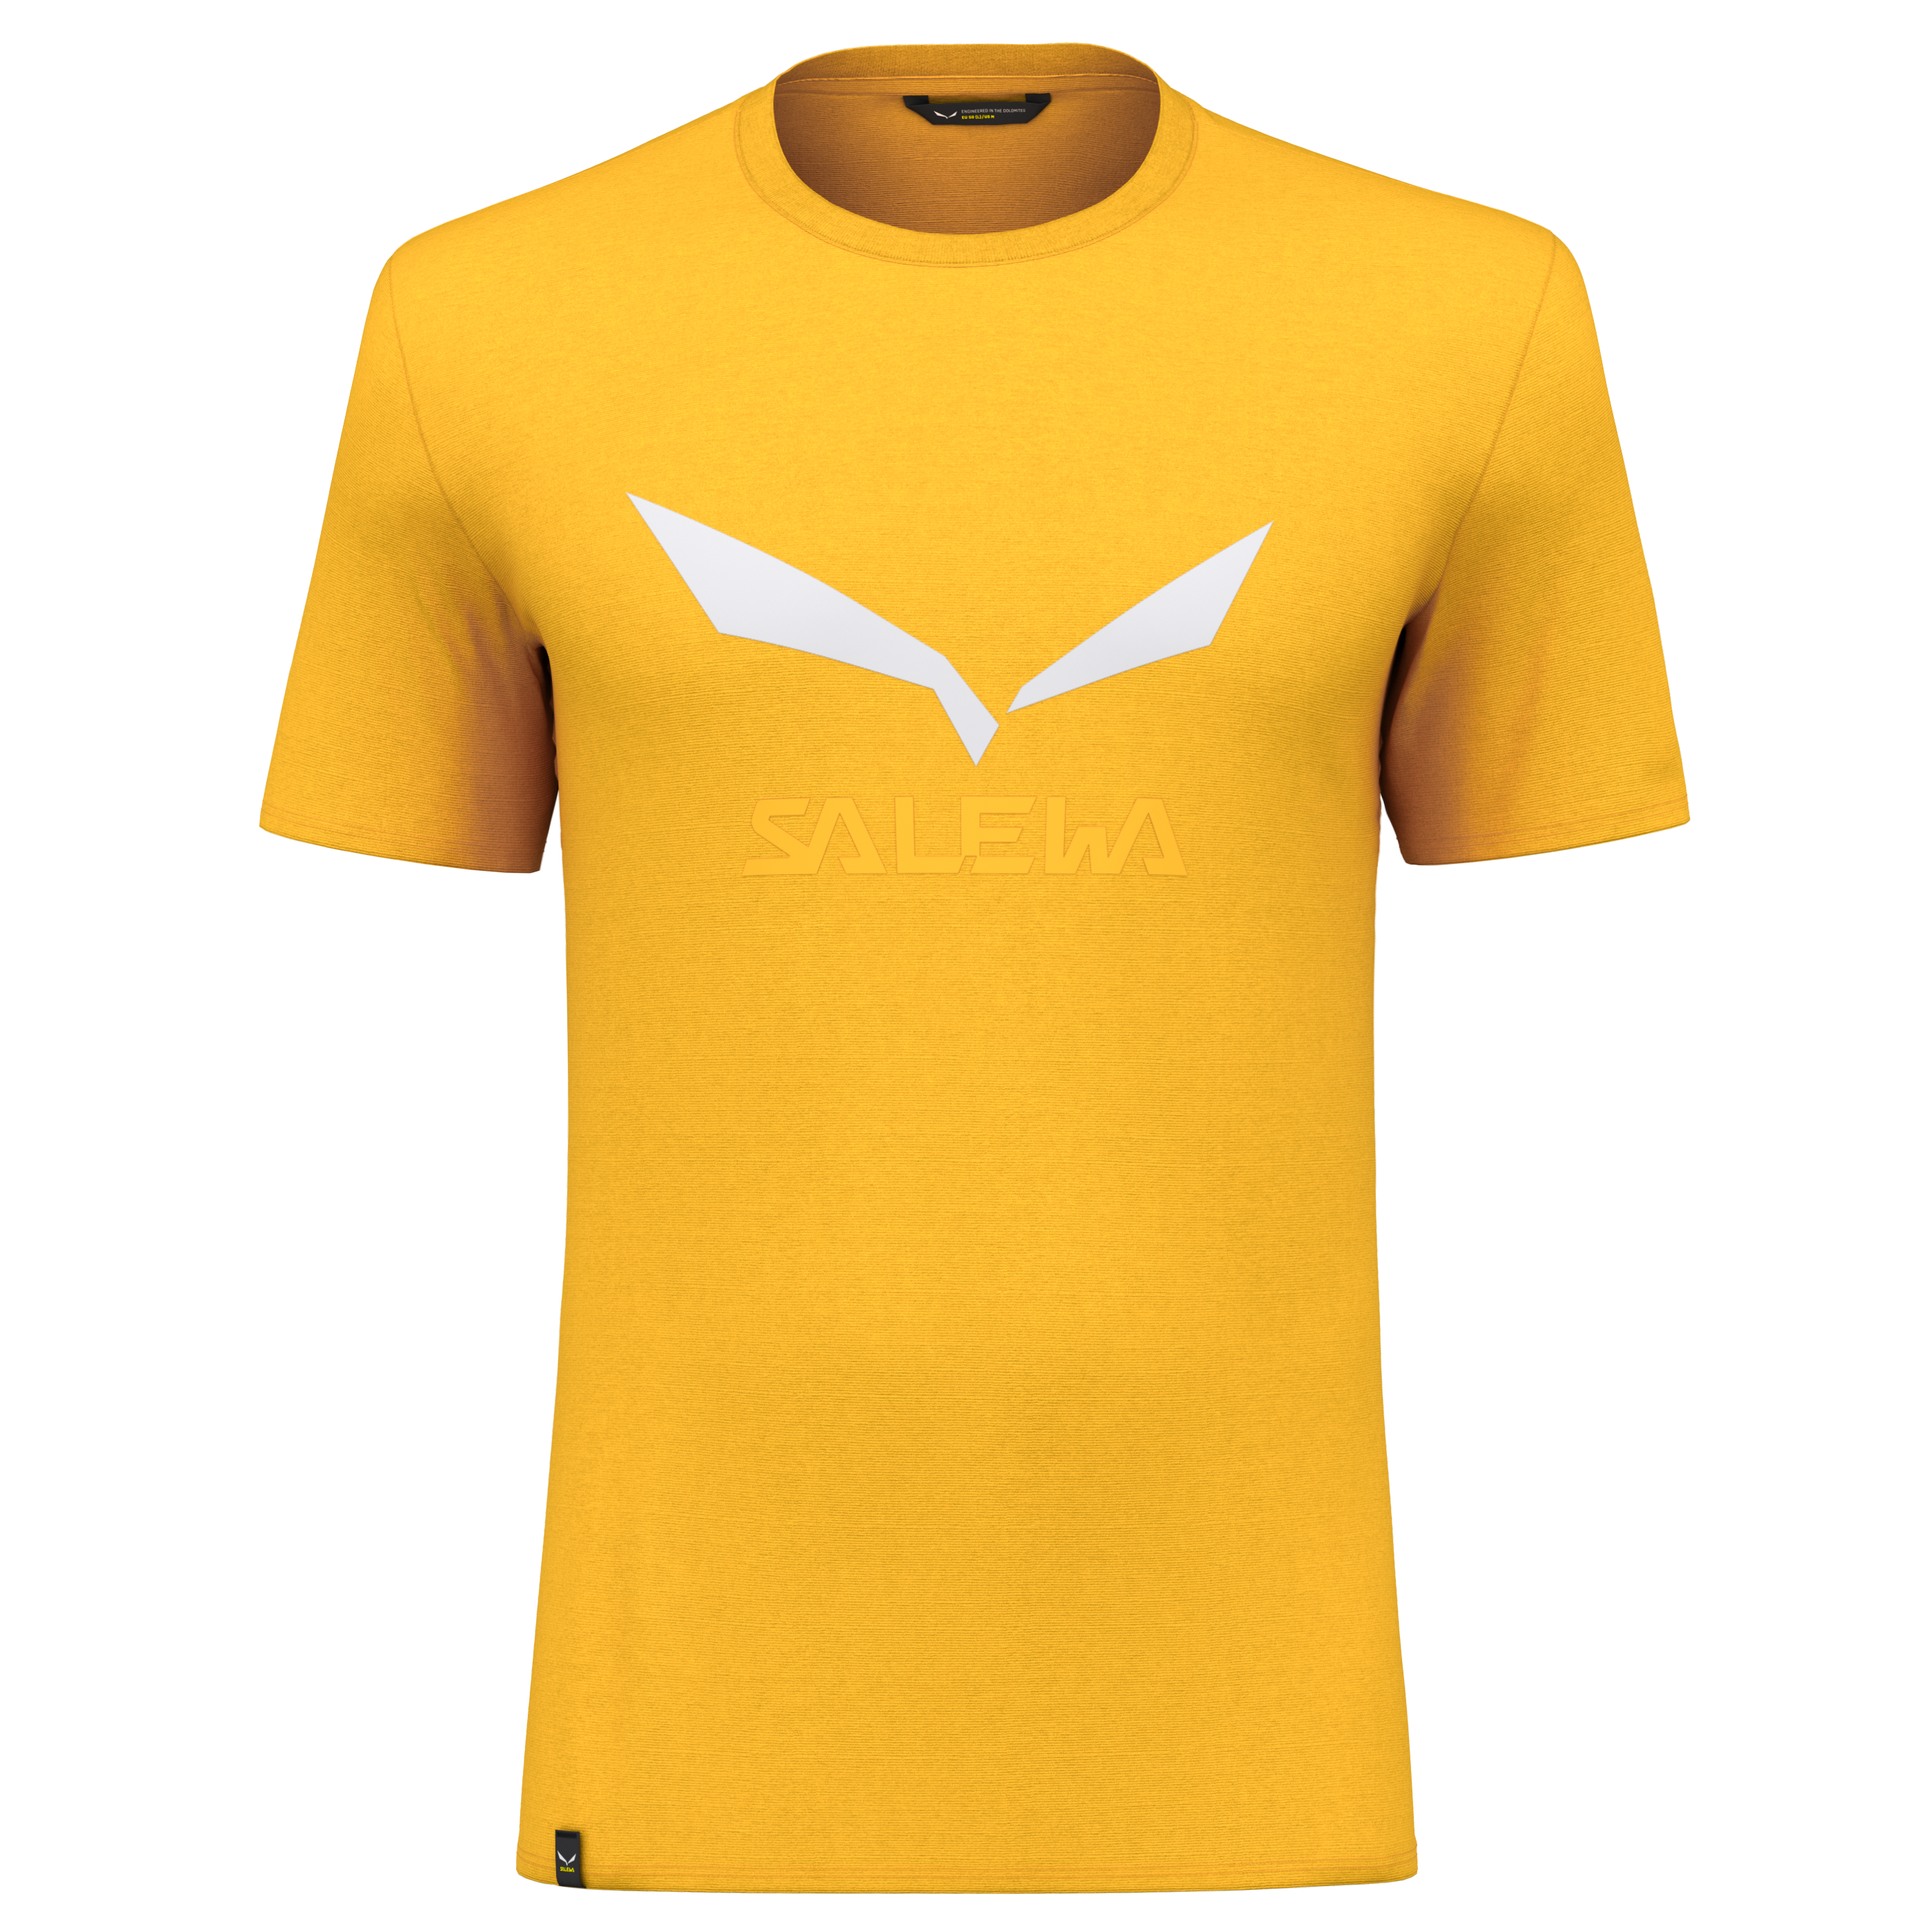 Salewa T-shirt de sport jaune-bleu p\u00e9trole style athl\u00e9tique Mode Hauts T-shirts de sport 